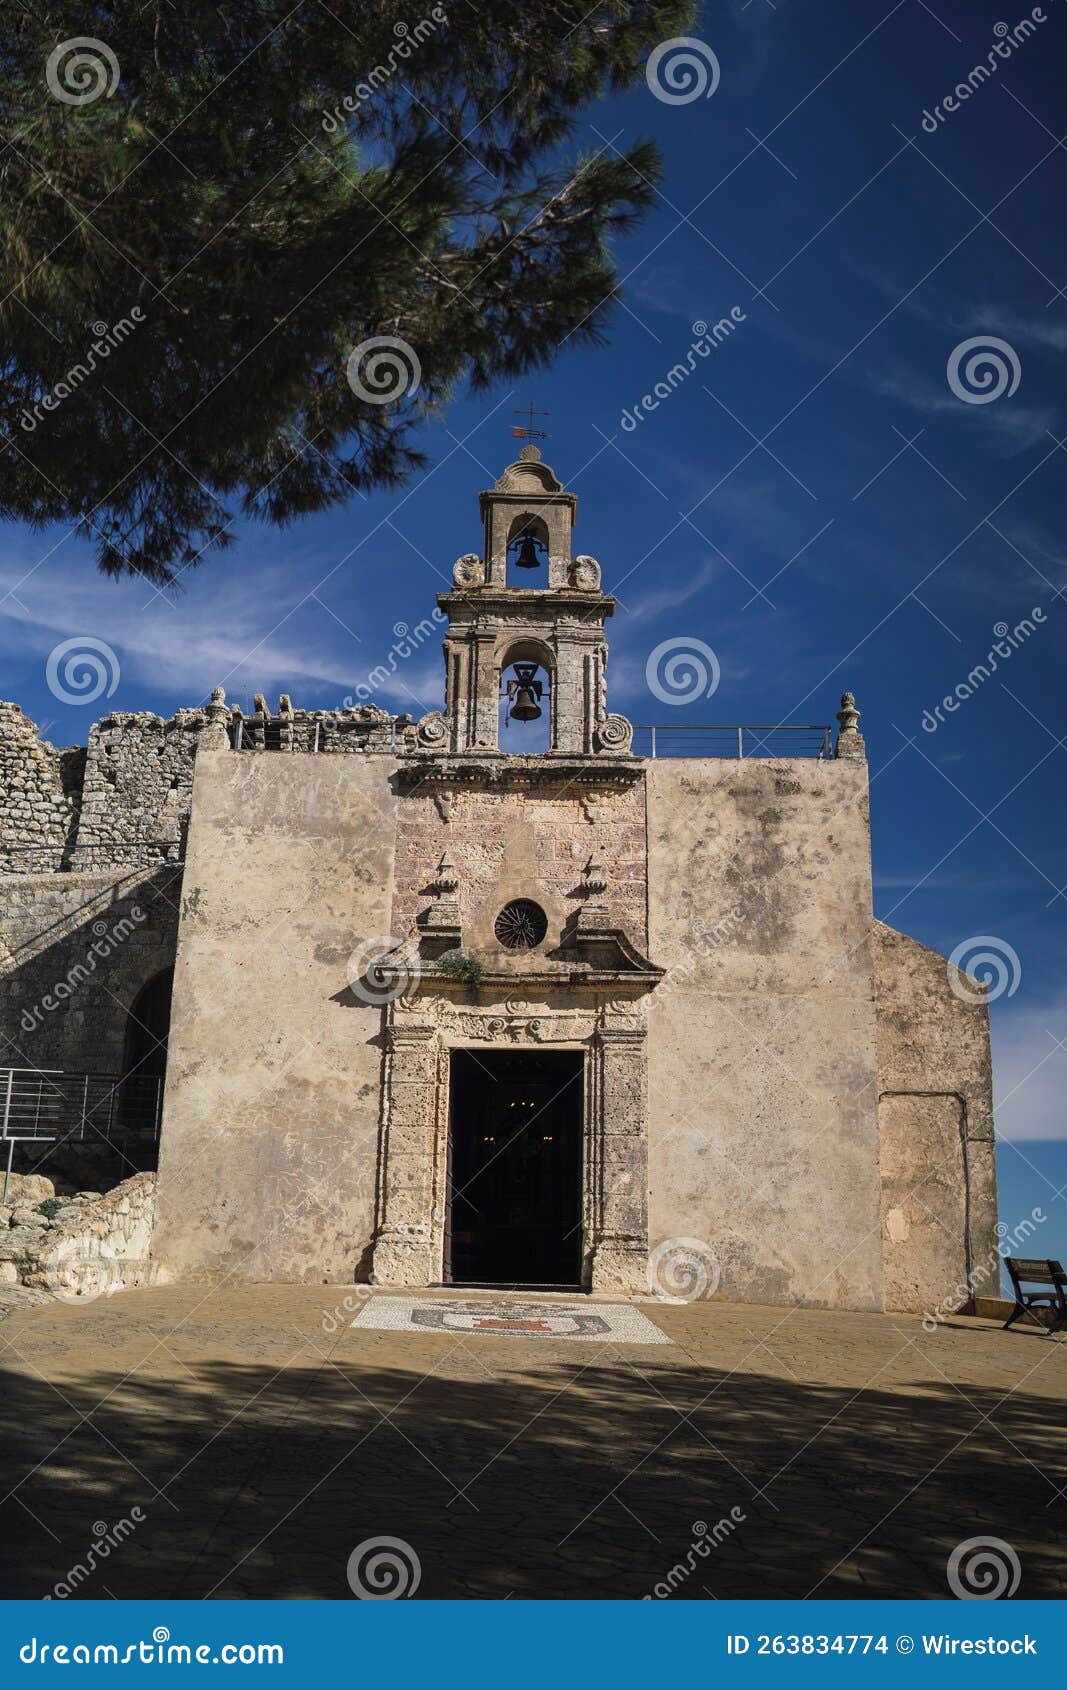 vertical shot of an ancient building in espera, spain